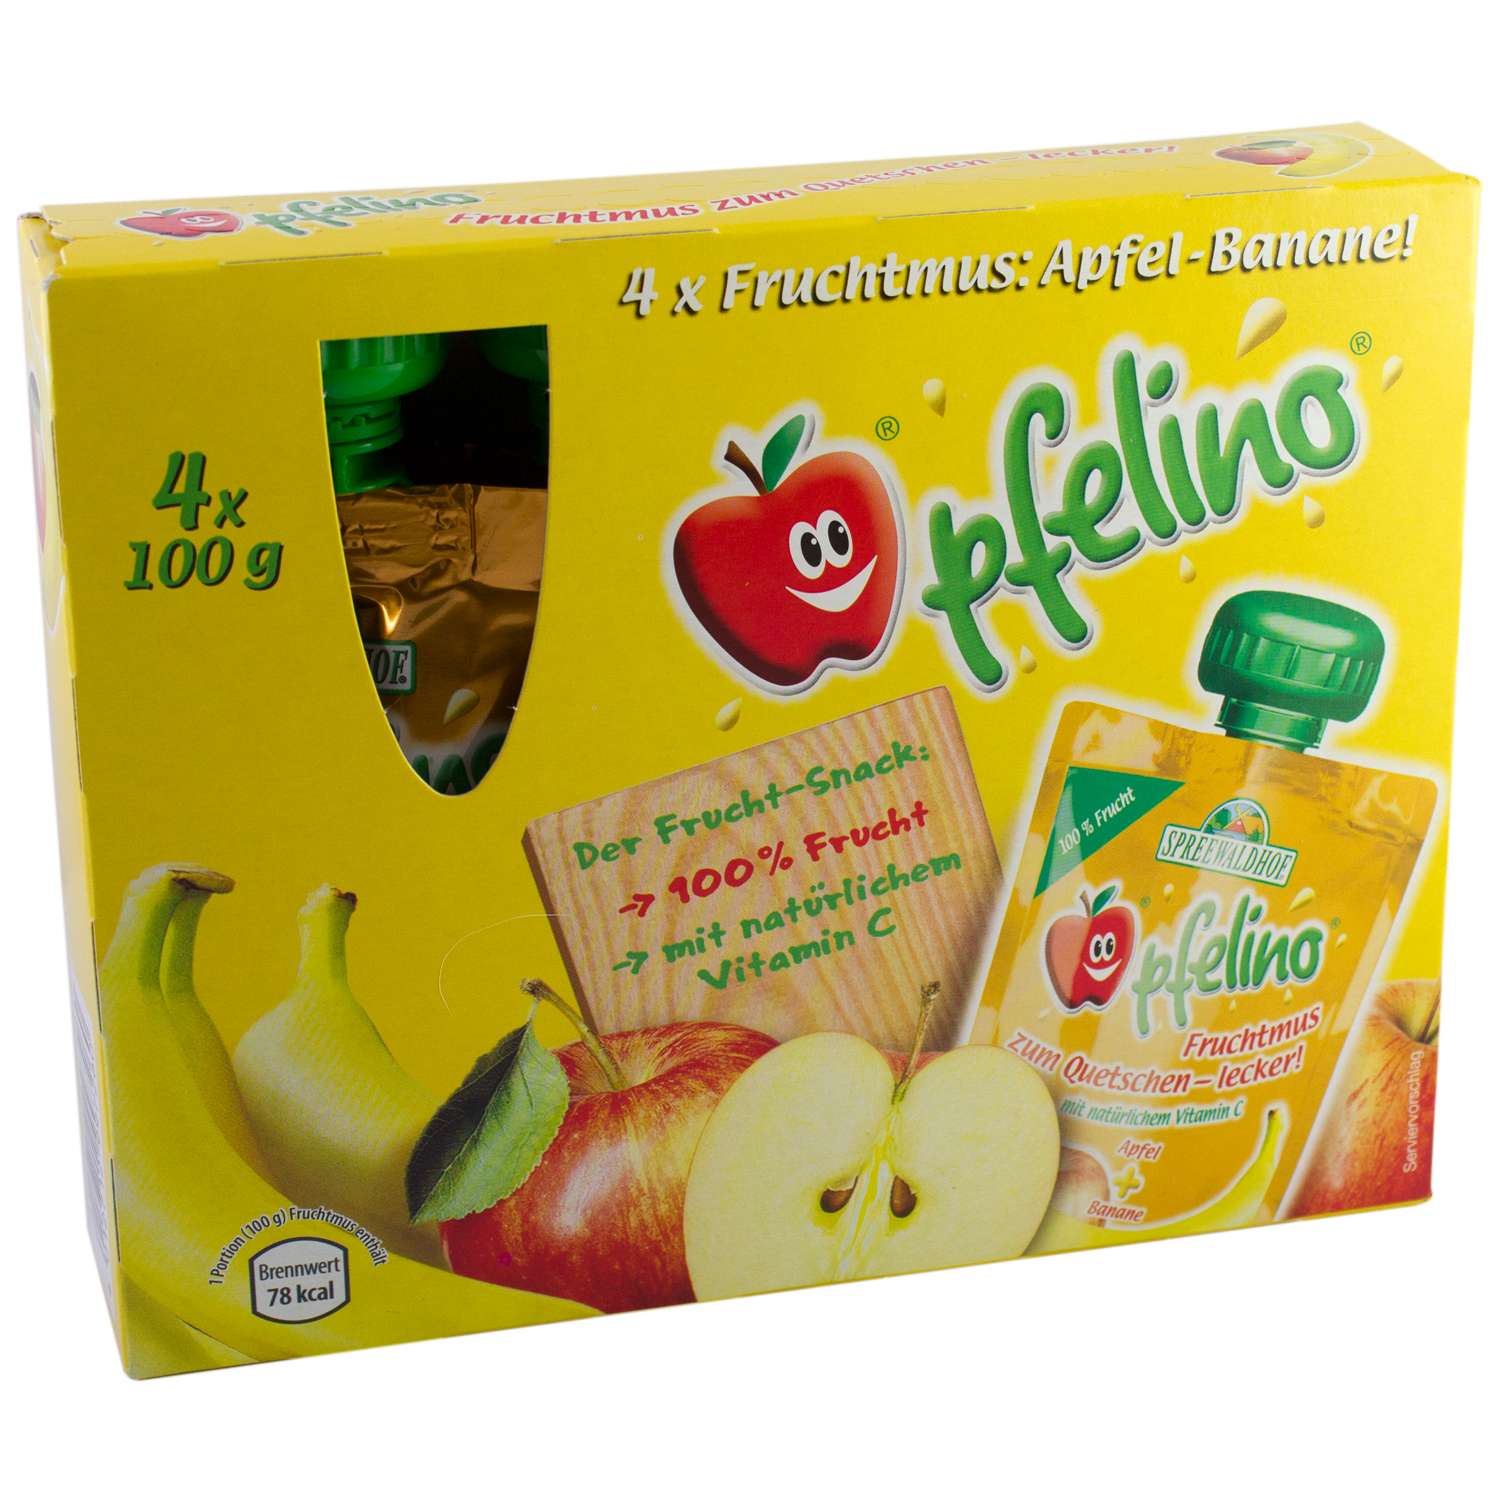 Ossikiste.de | Spreewaldhof Apfelino Fruchtmus Apfel-Banane 400 g ...